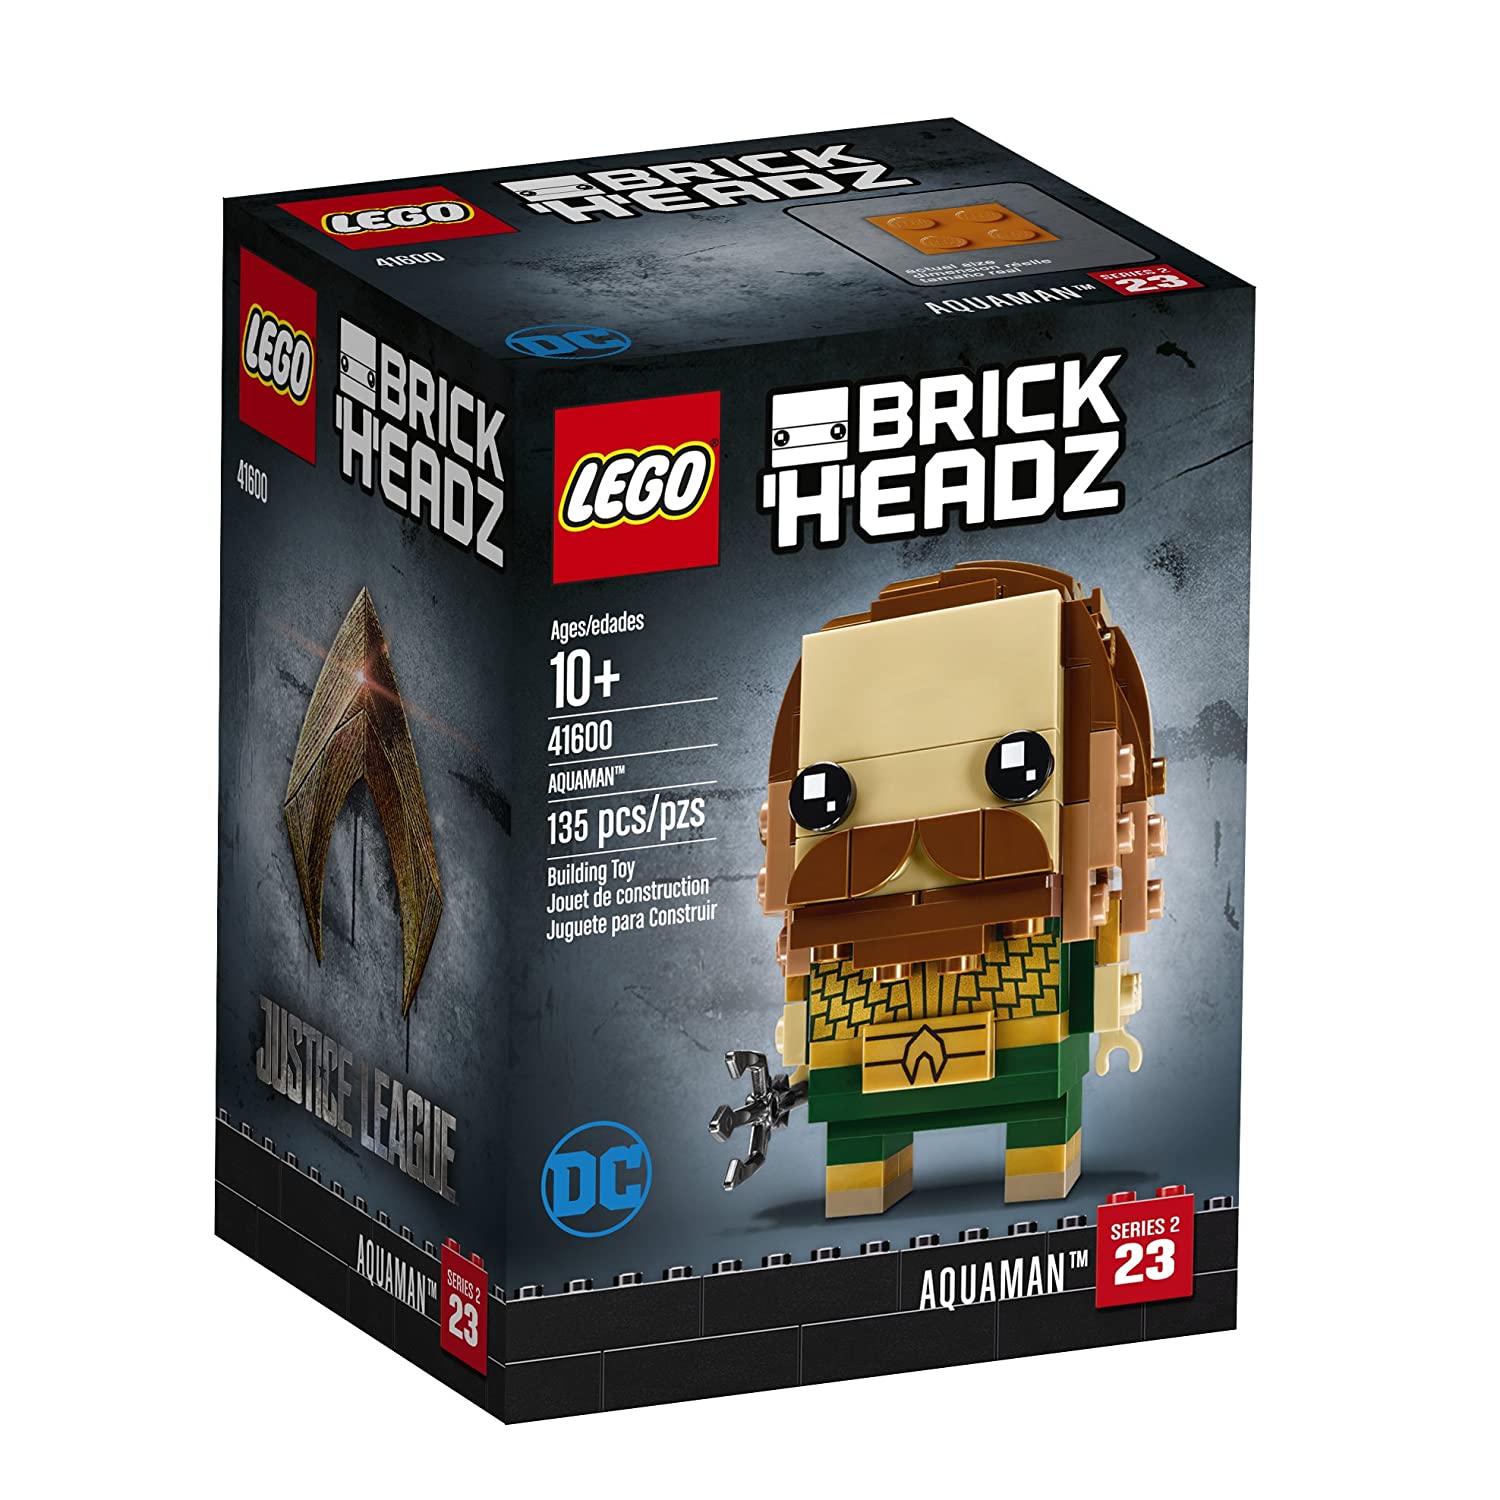 11 Best Lego Brickheadz 2022 - Buying Guide & Reviews 7